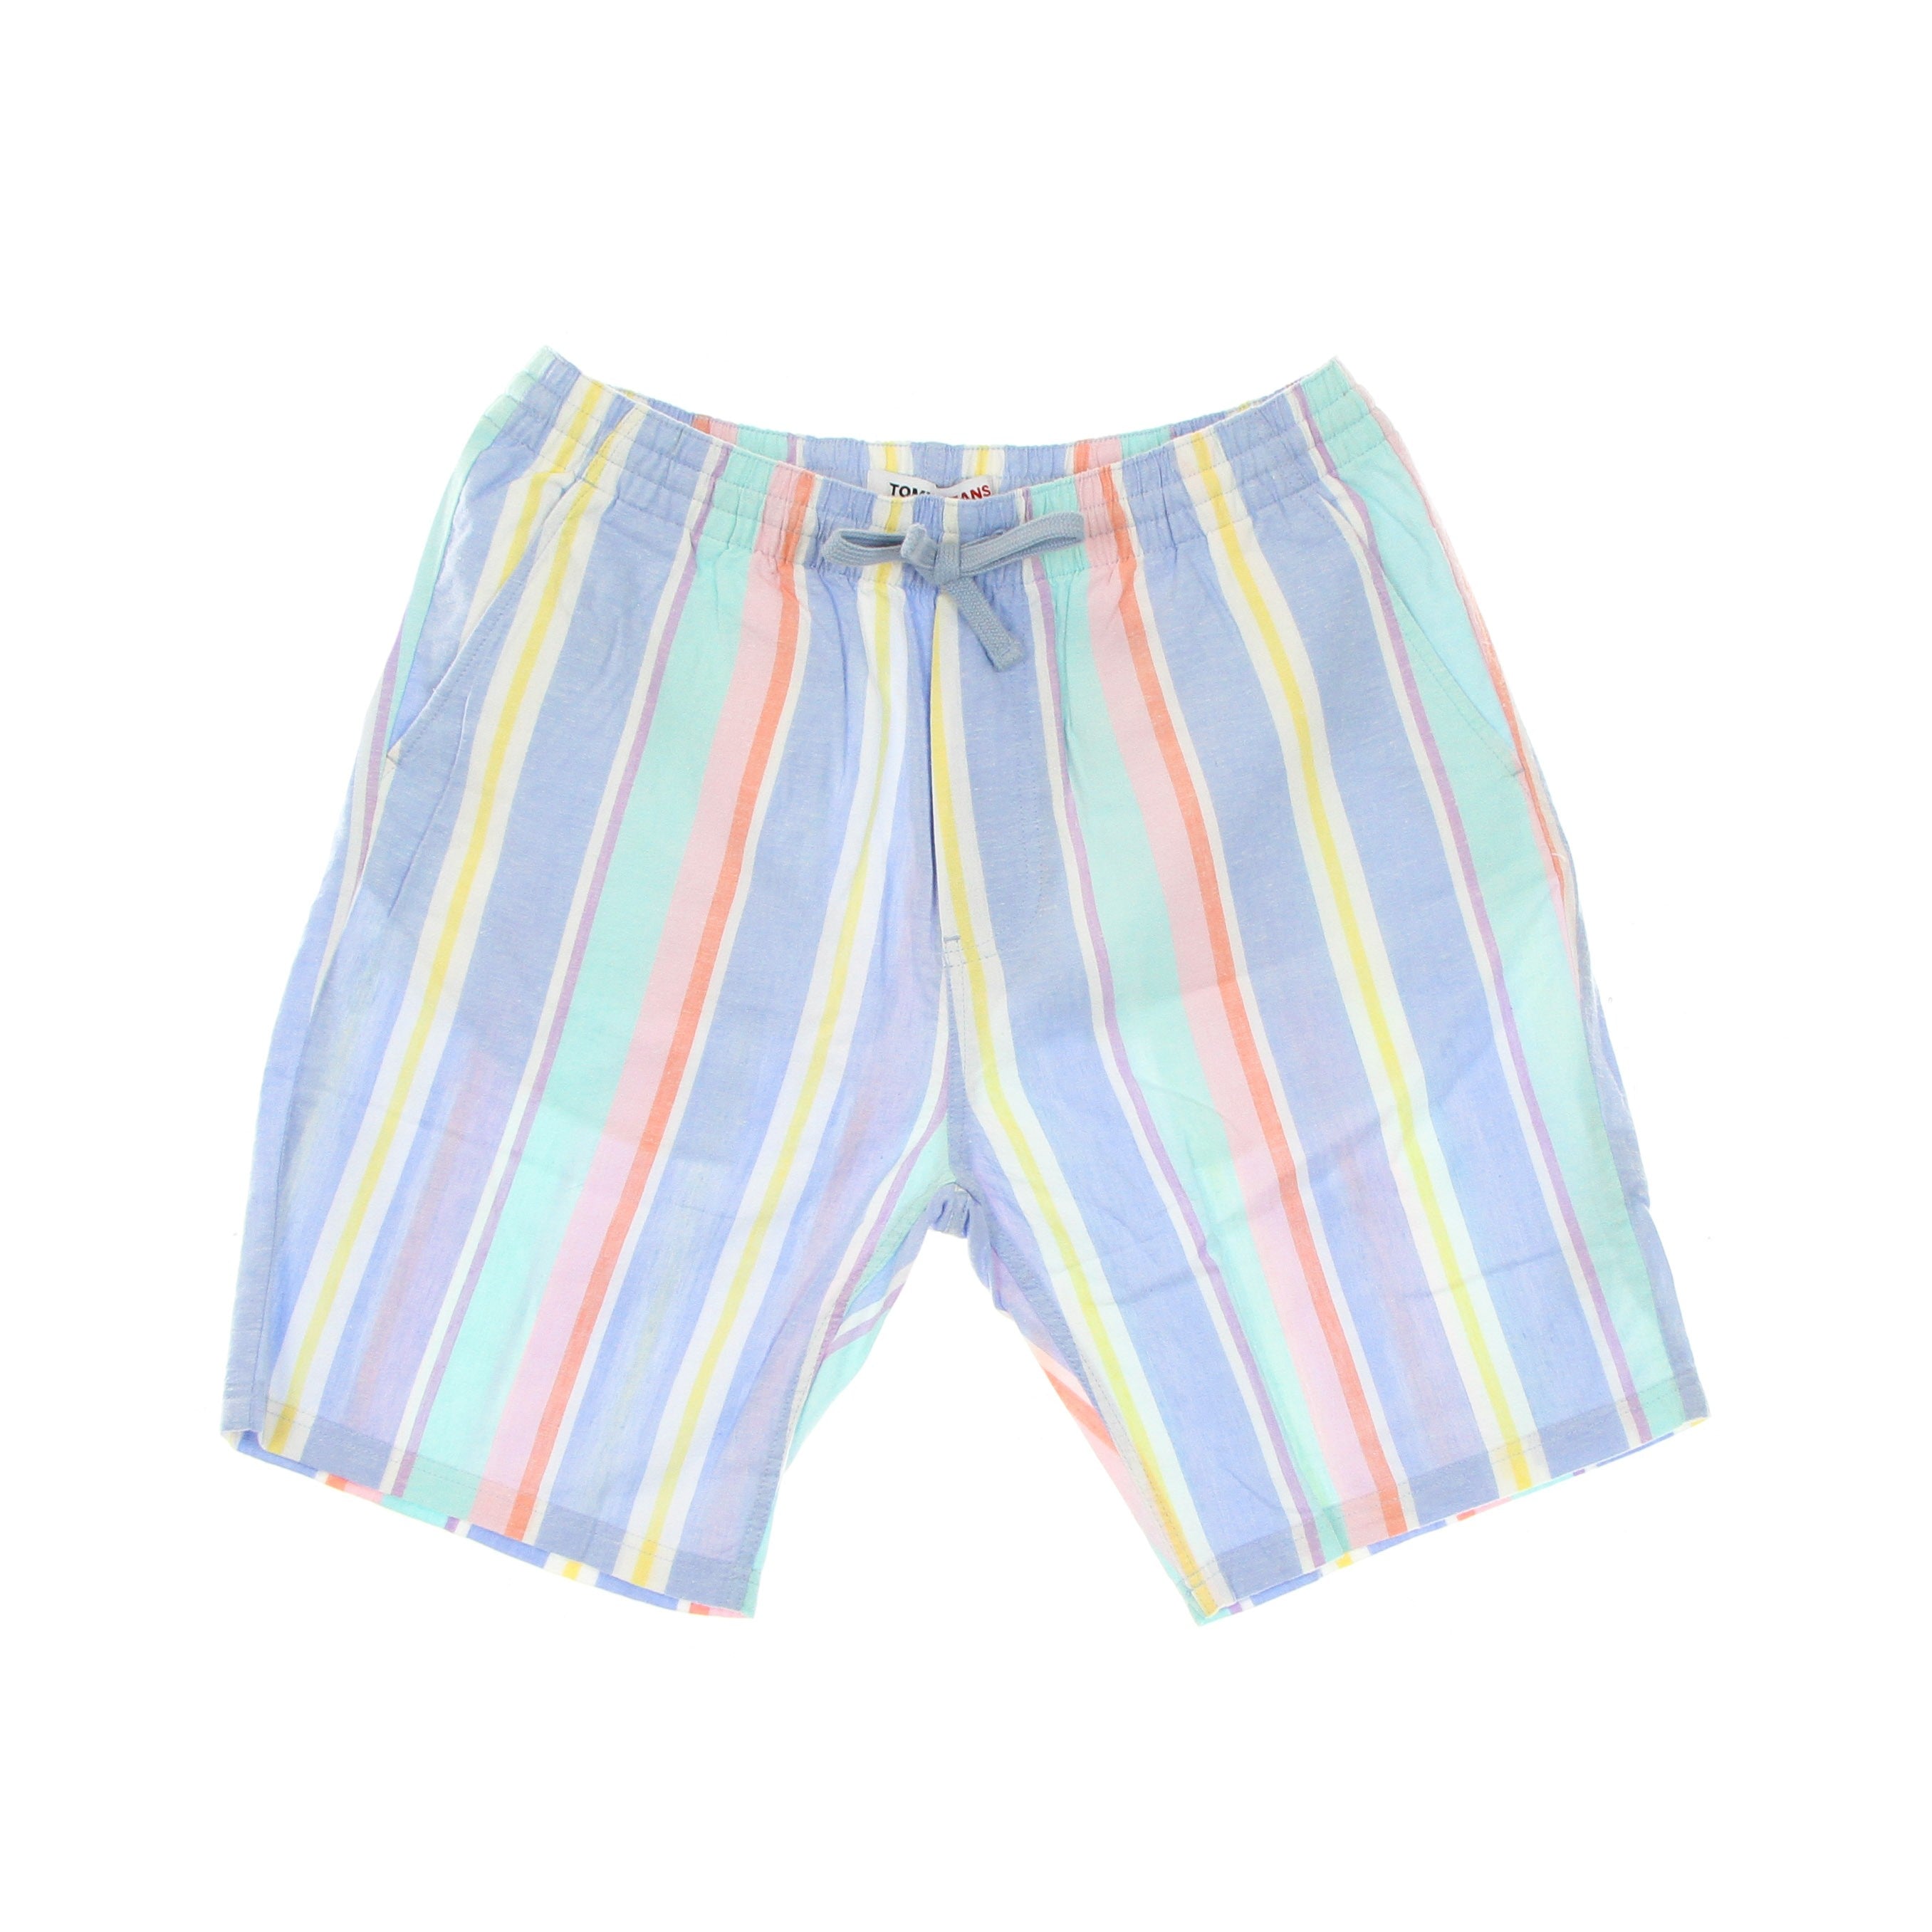 Tommy Hilfiger, Pantalone Corto Uomo Pastel Stripe 1 Short, Light Powdery Blue/stripe